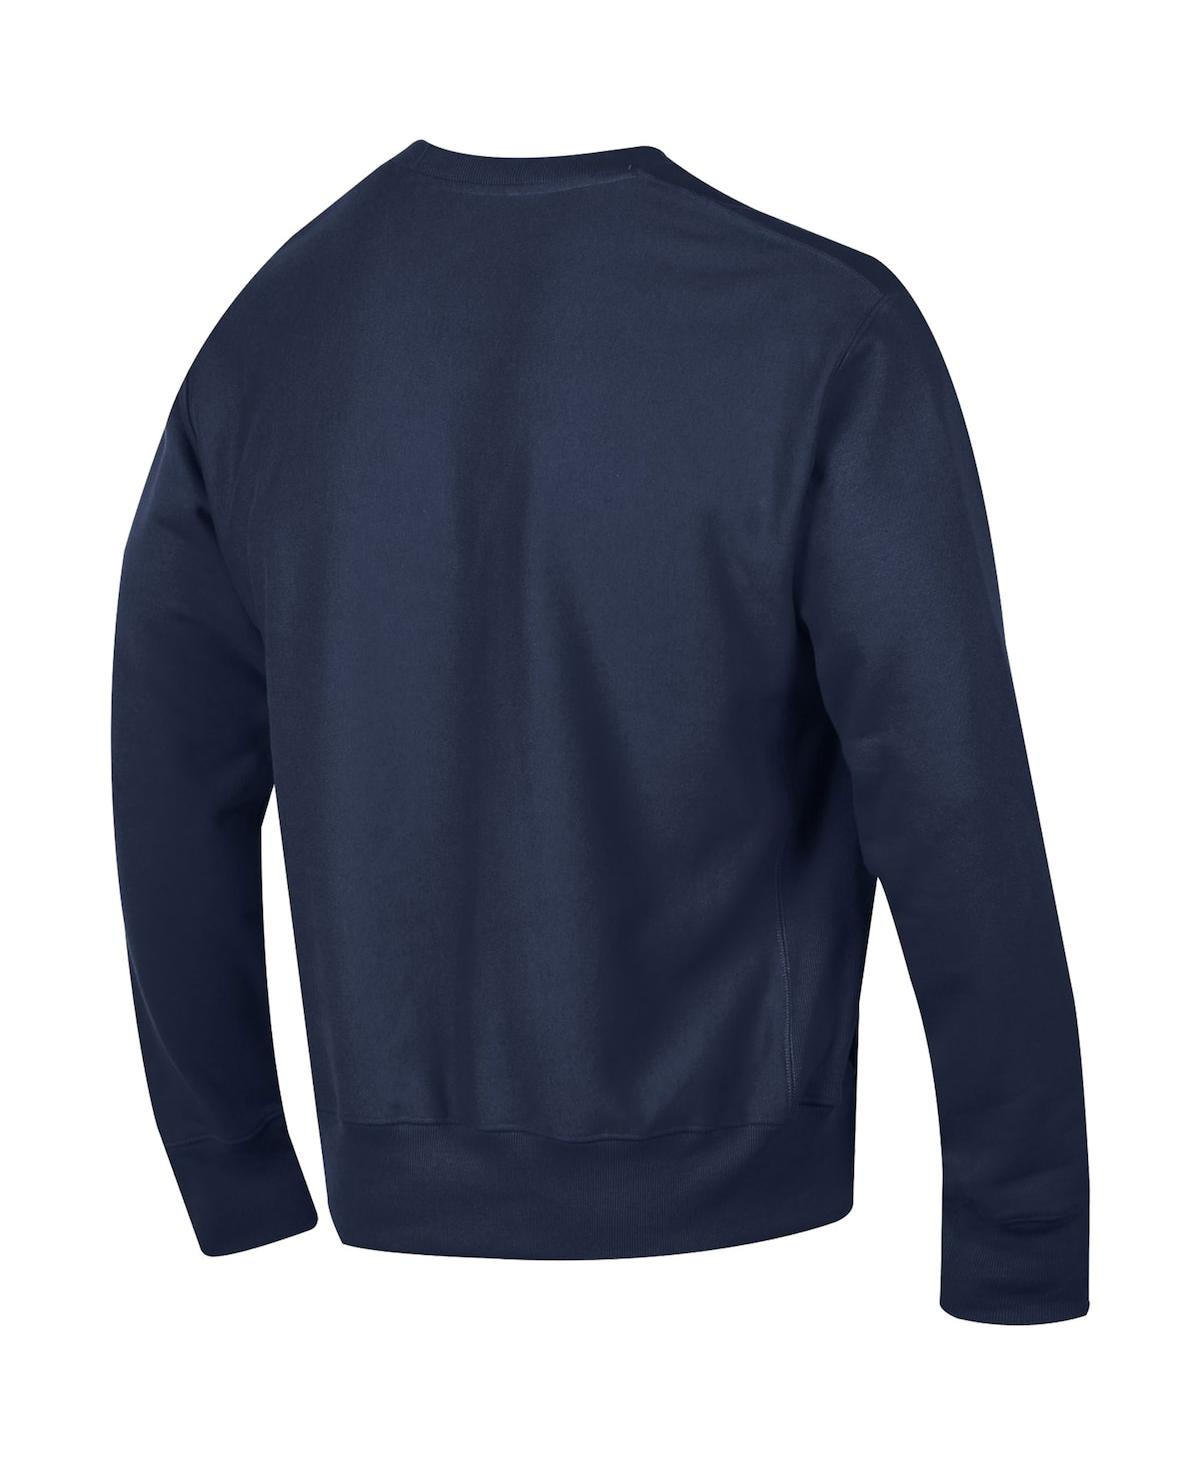 Shop Champion Men's  Navy Syracuse Orange Arch Reverse Weave Pullover Sweatshirt